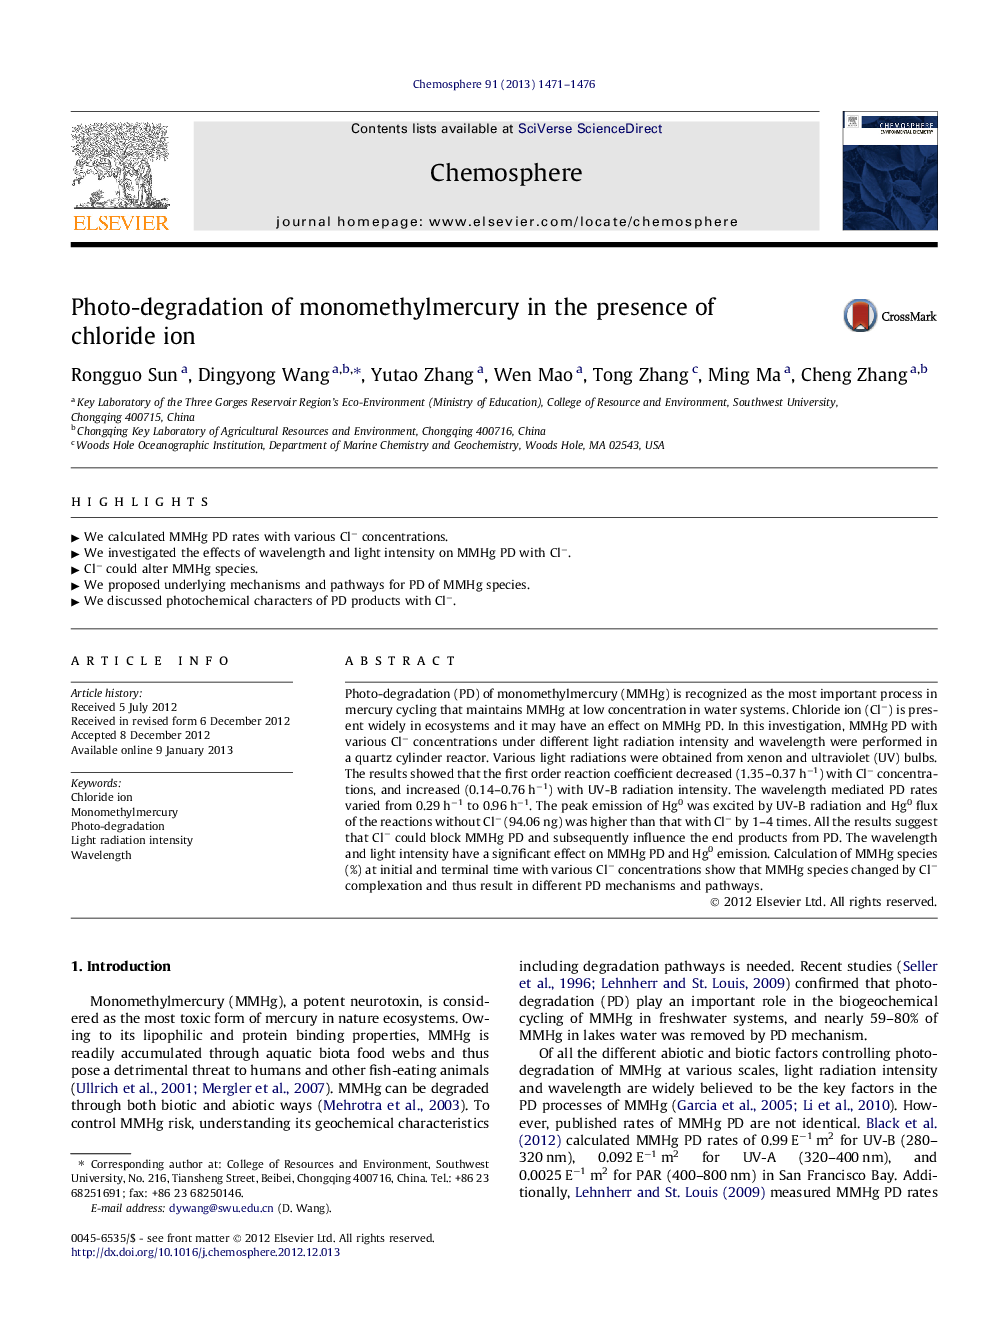 Photo-degradation of monomethylmercury in the presence of chloride ion